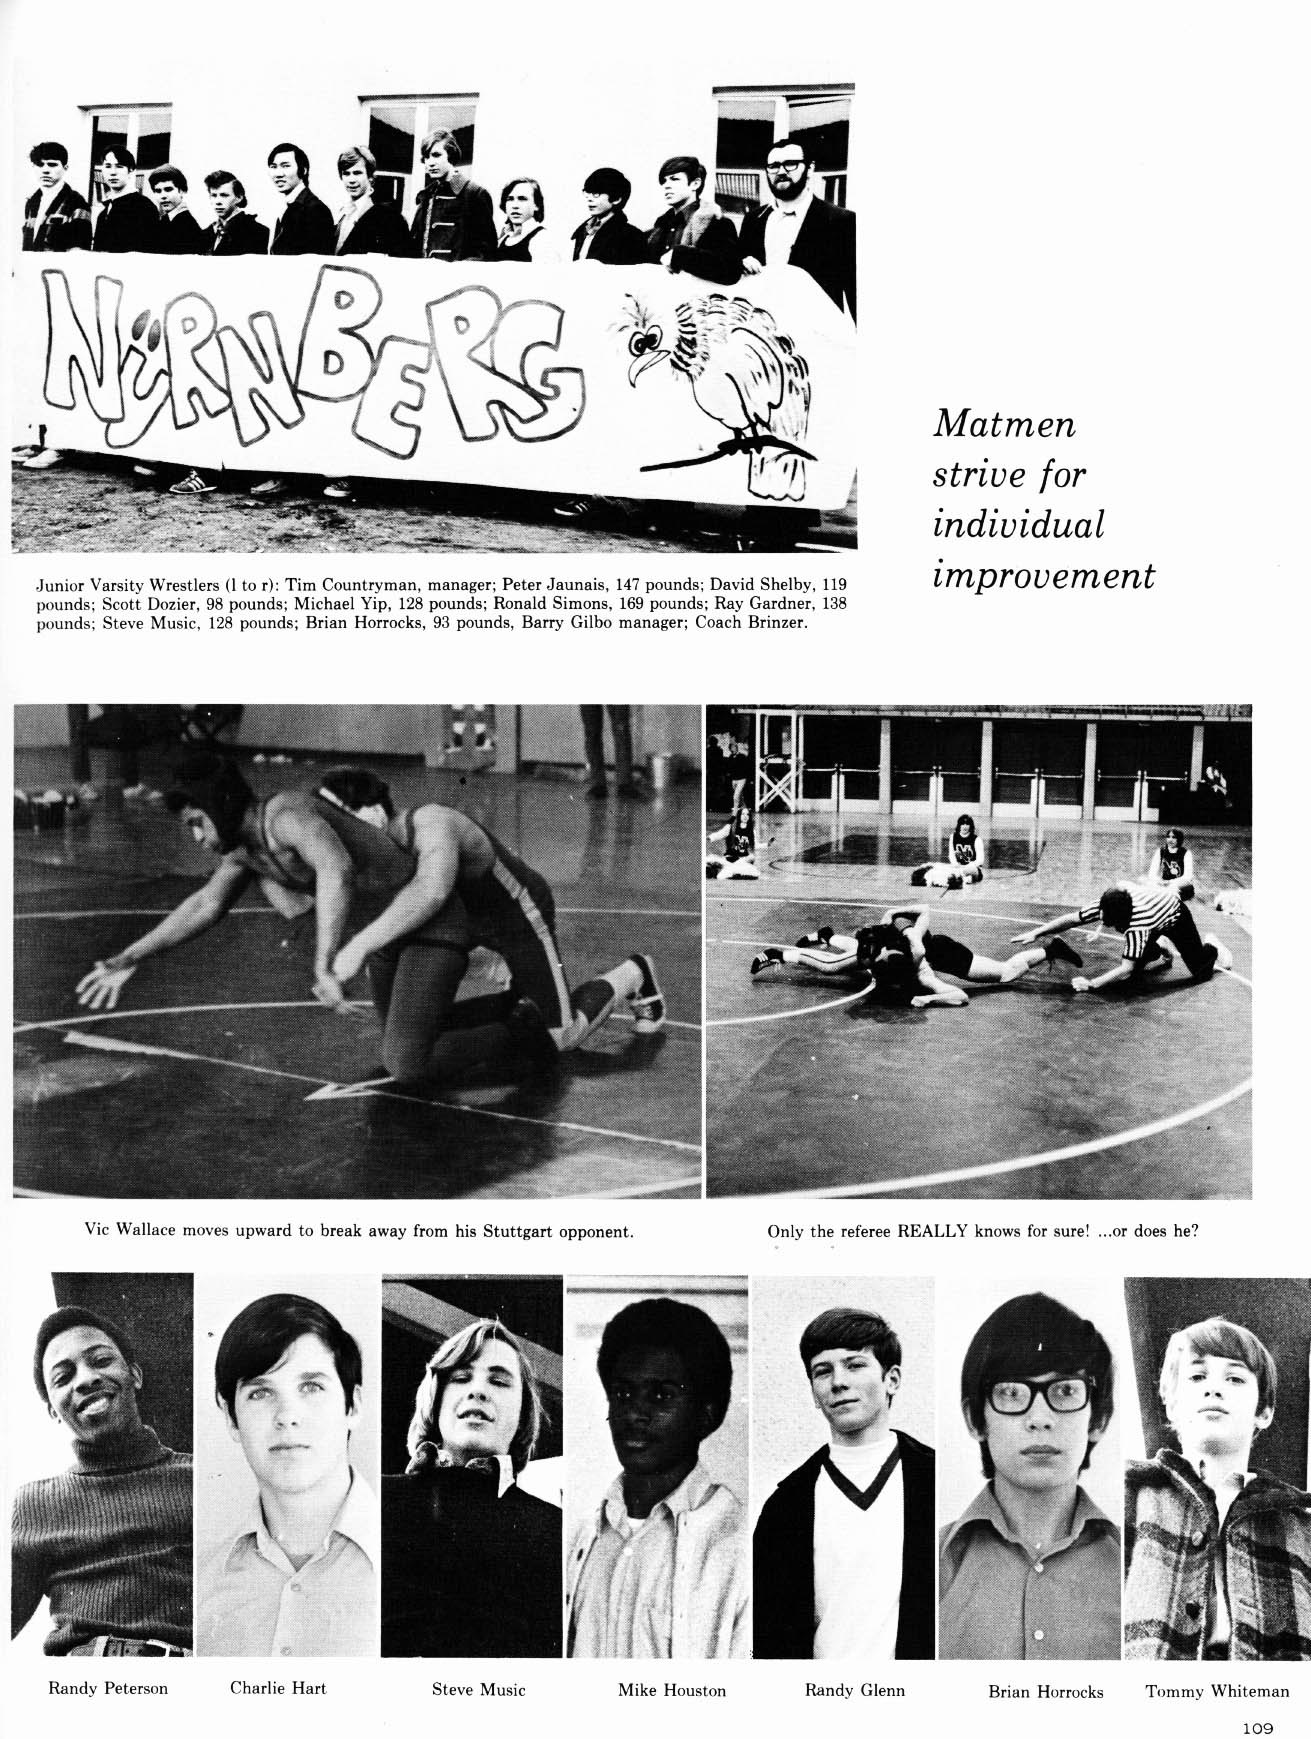 111 Page 109 Wrestling